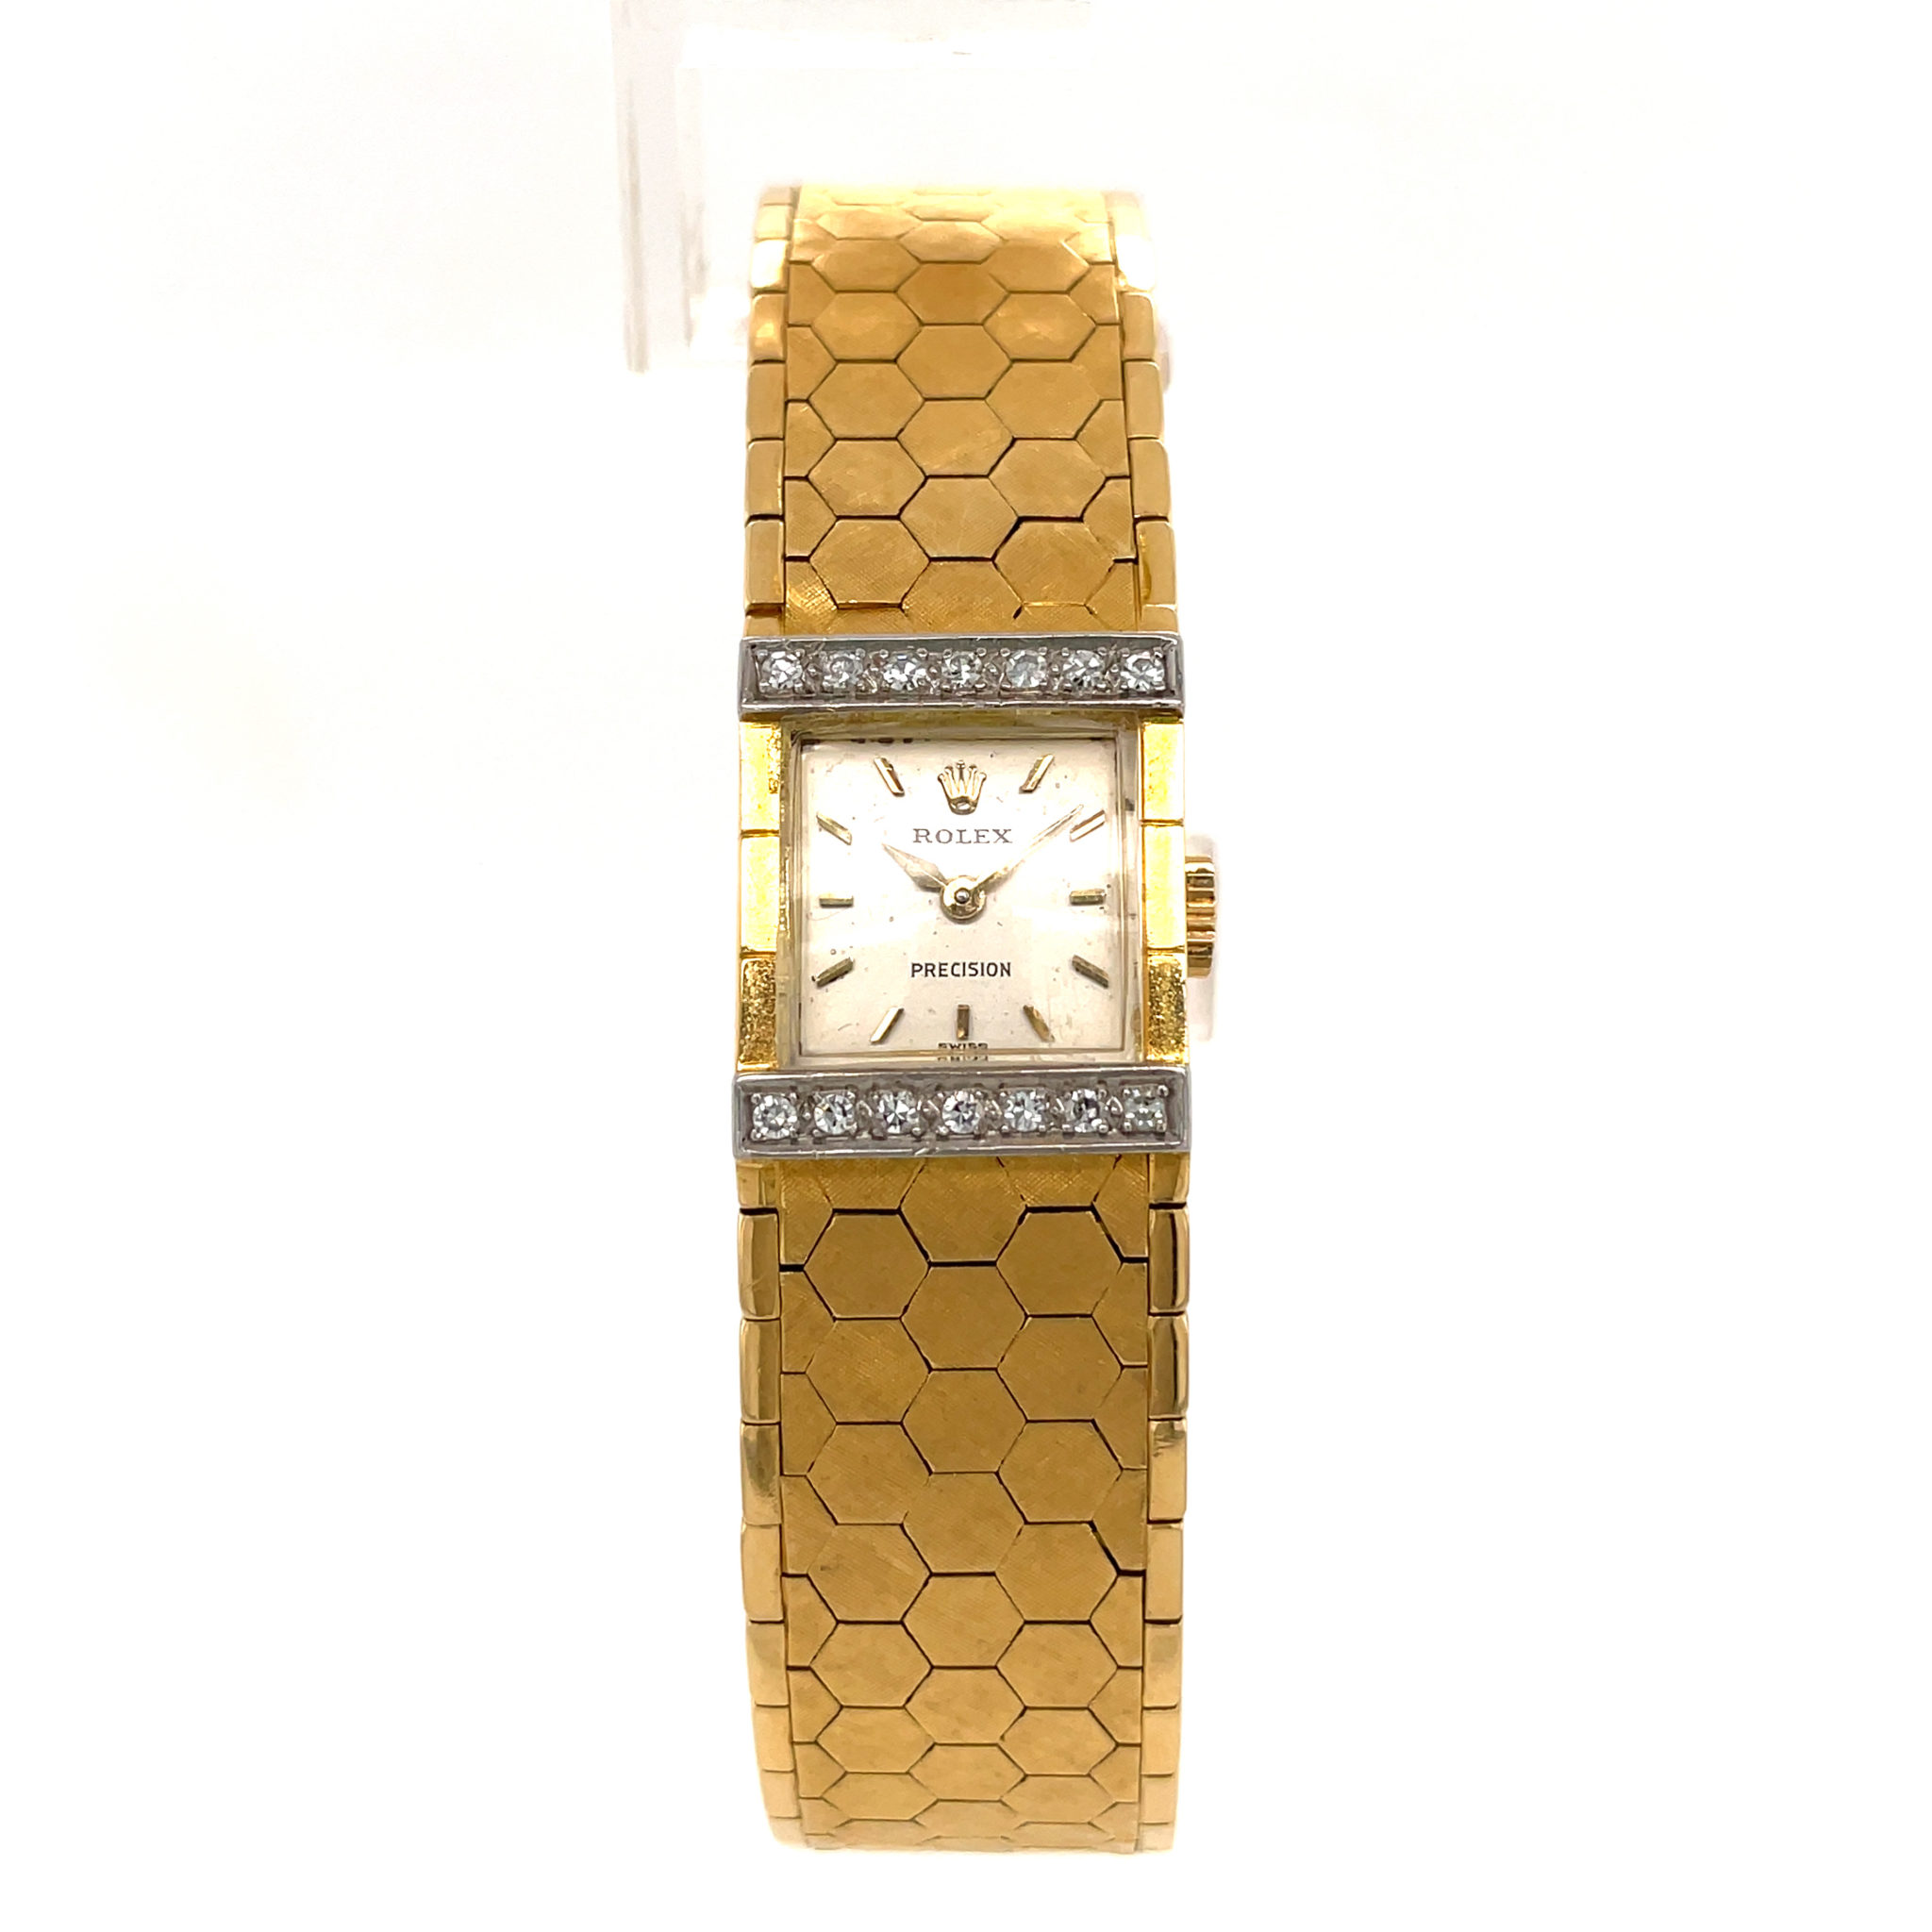 Rolex Precision Lady's Gold 750 Vintage watch Factory diamaond setting ca. 1960s